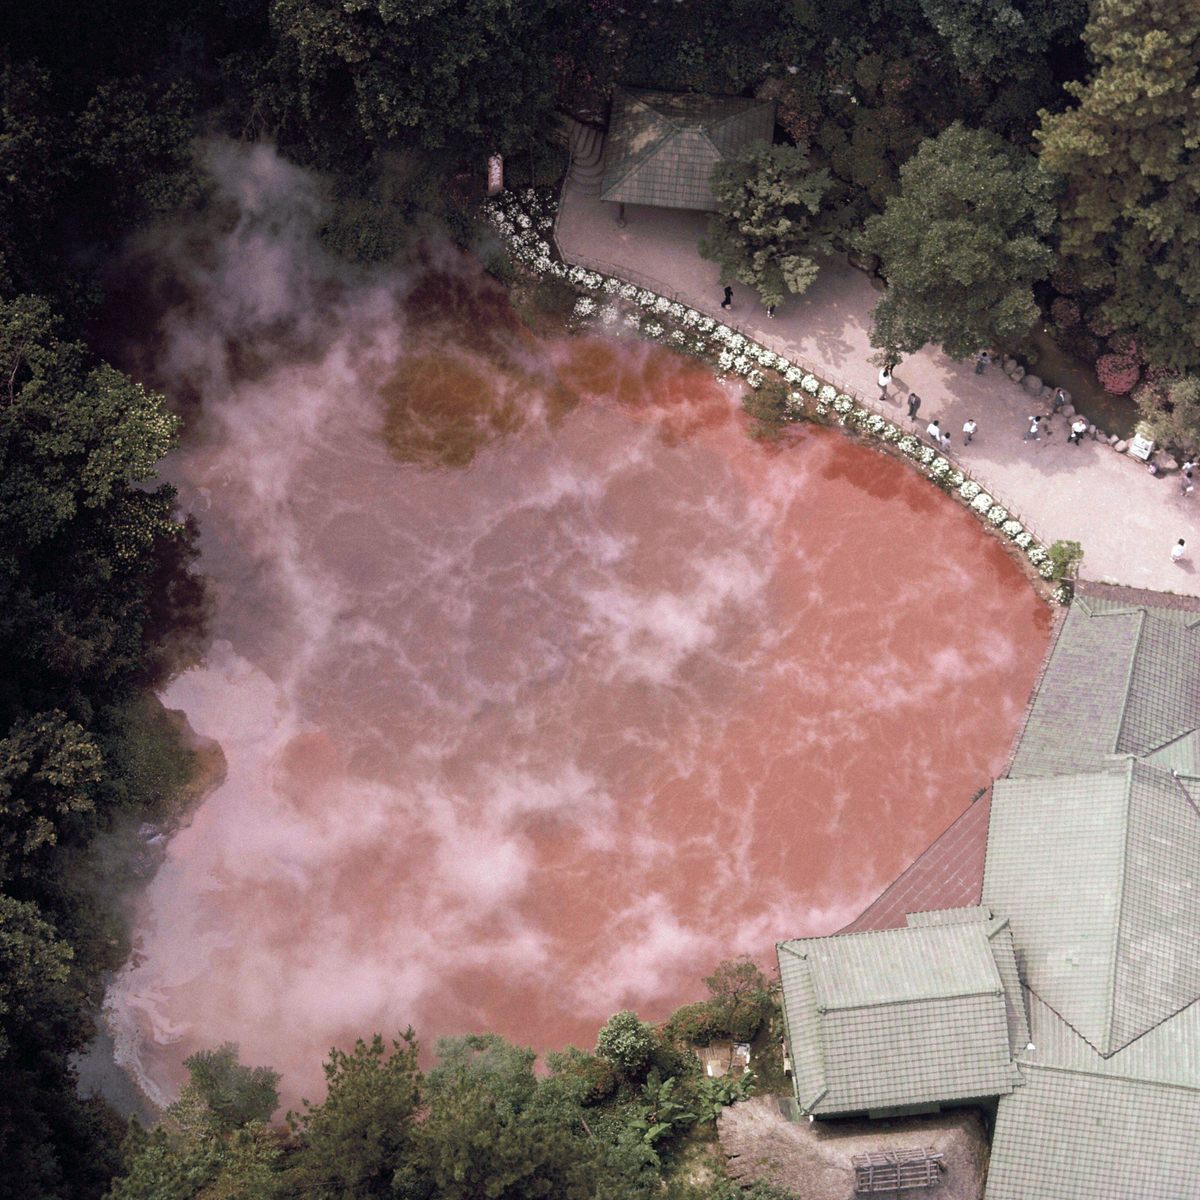 An aerial view of Beppu's blood-red Chinoike Jigoku hot spring.